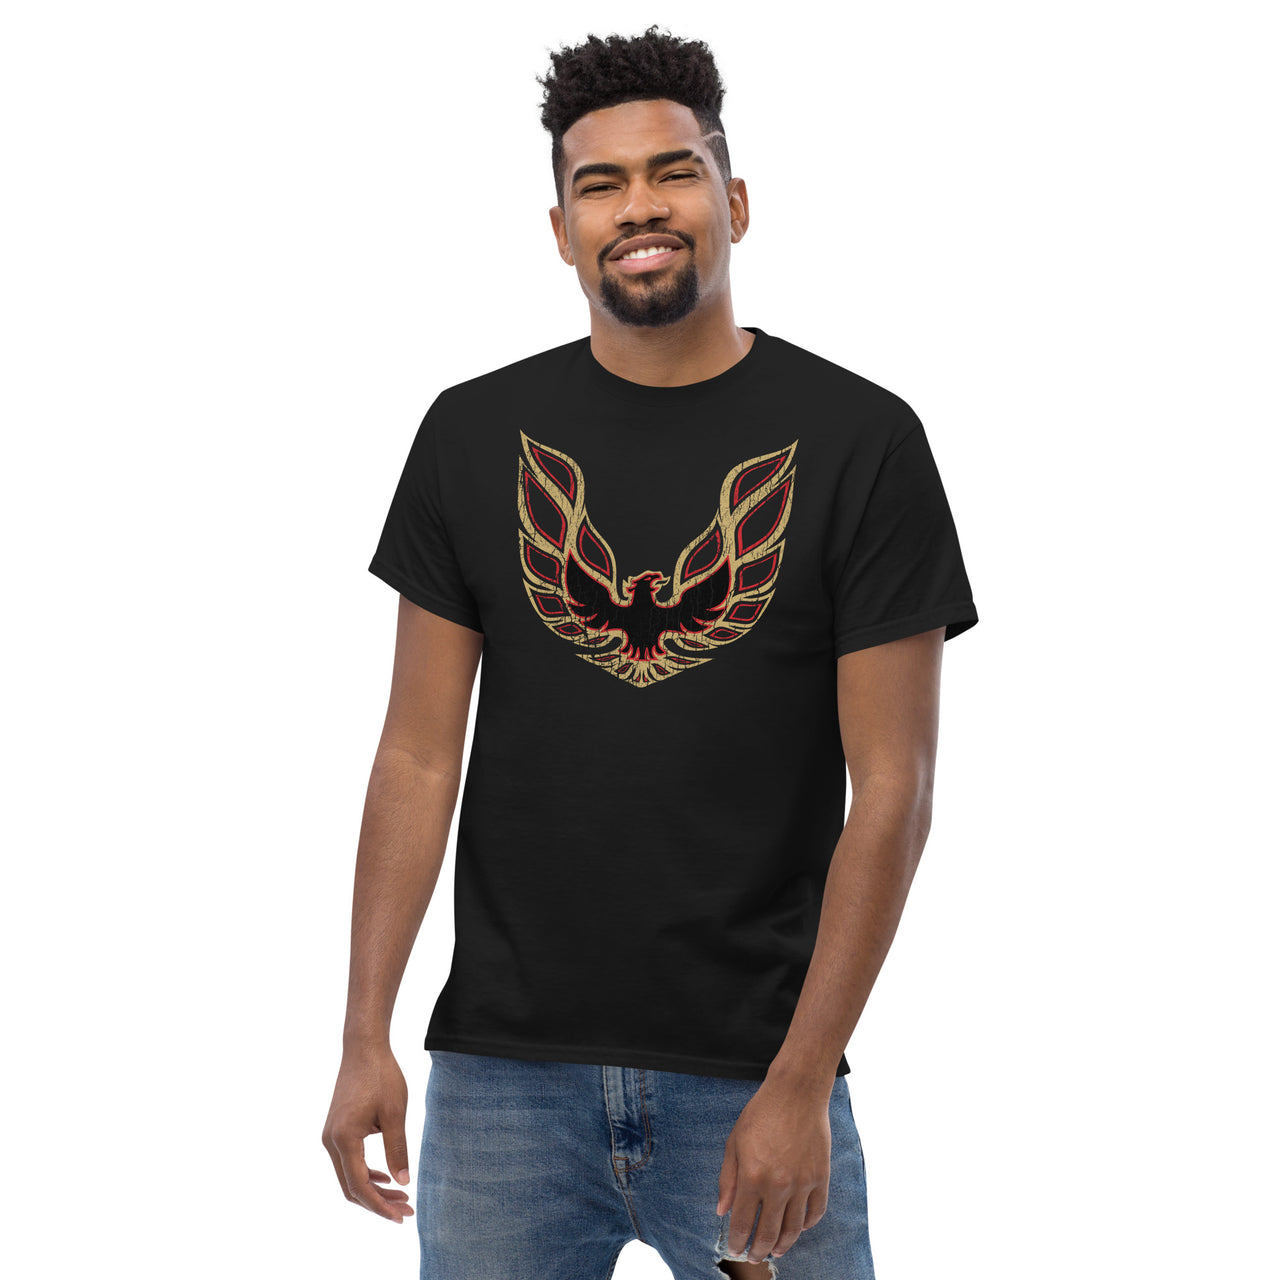 Traditional Trans Am Firebird Logo T-Shirt modeled in black